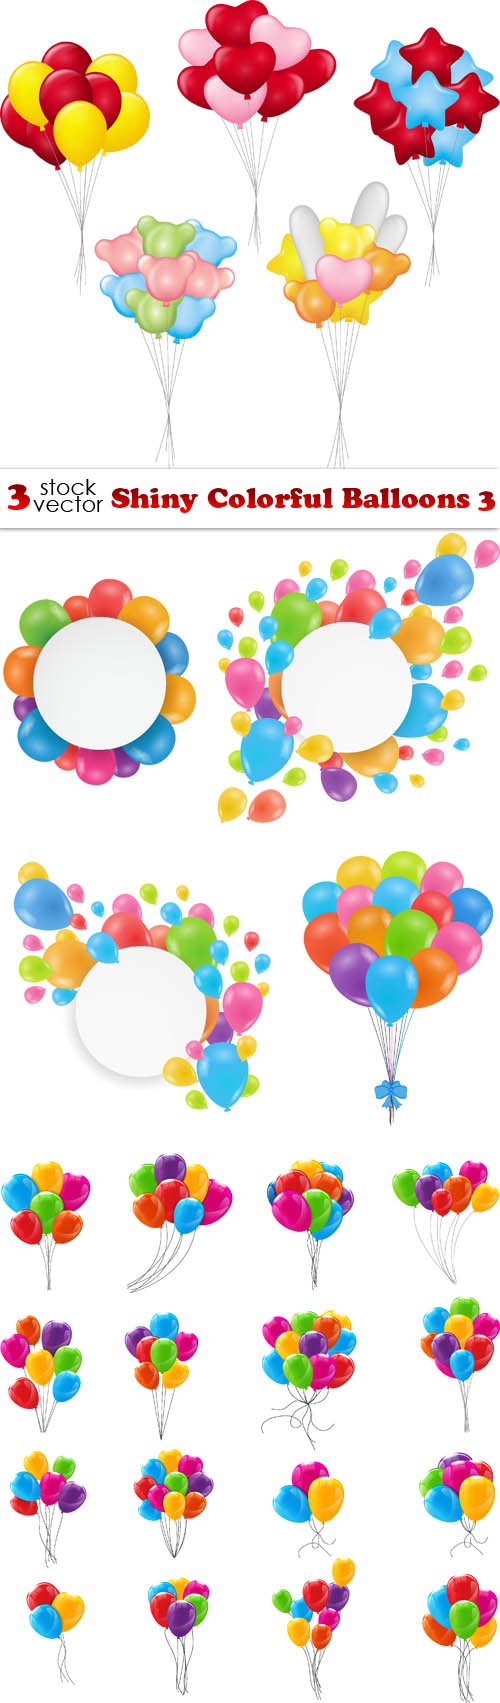 Vectors - Shiny Colorful Balloons 3